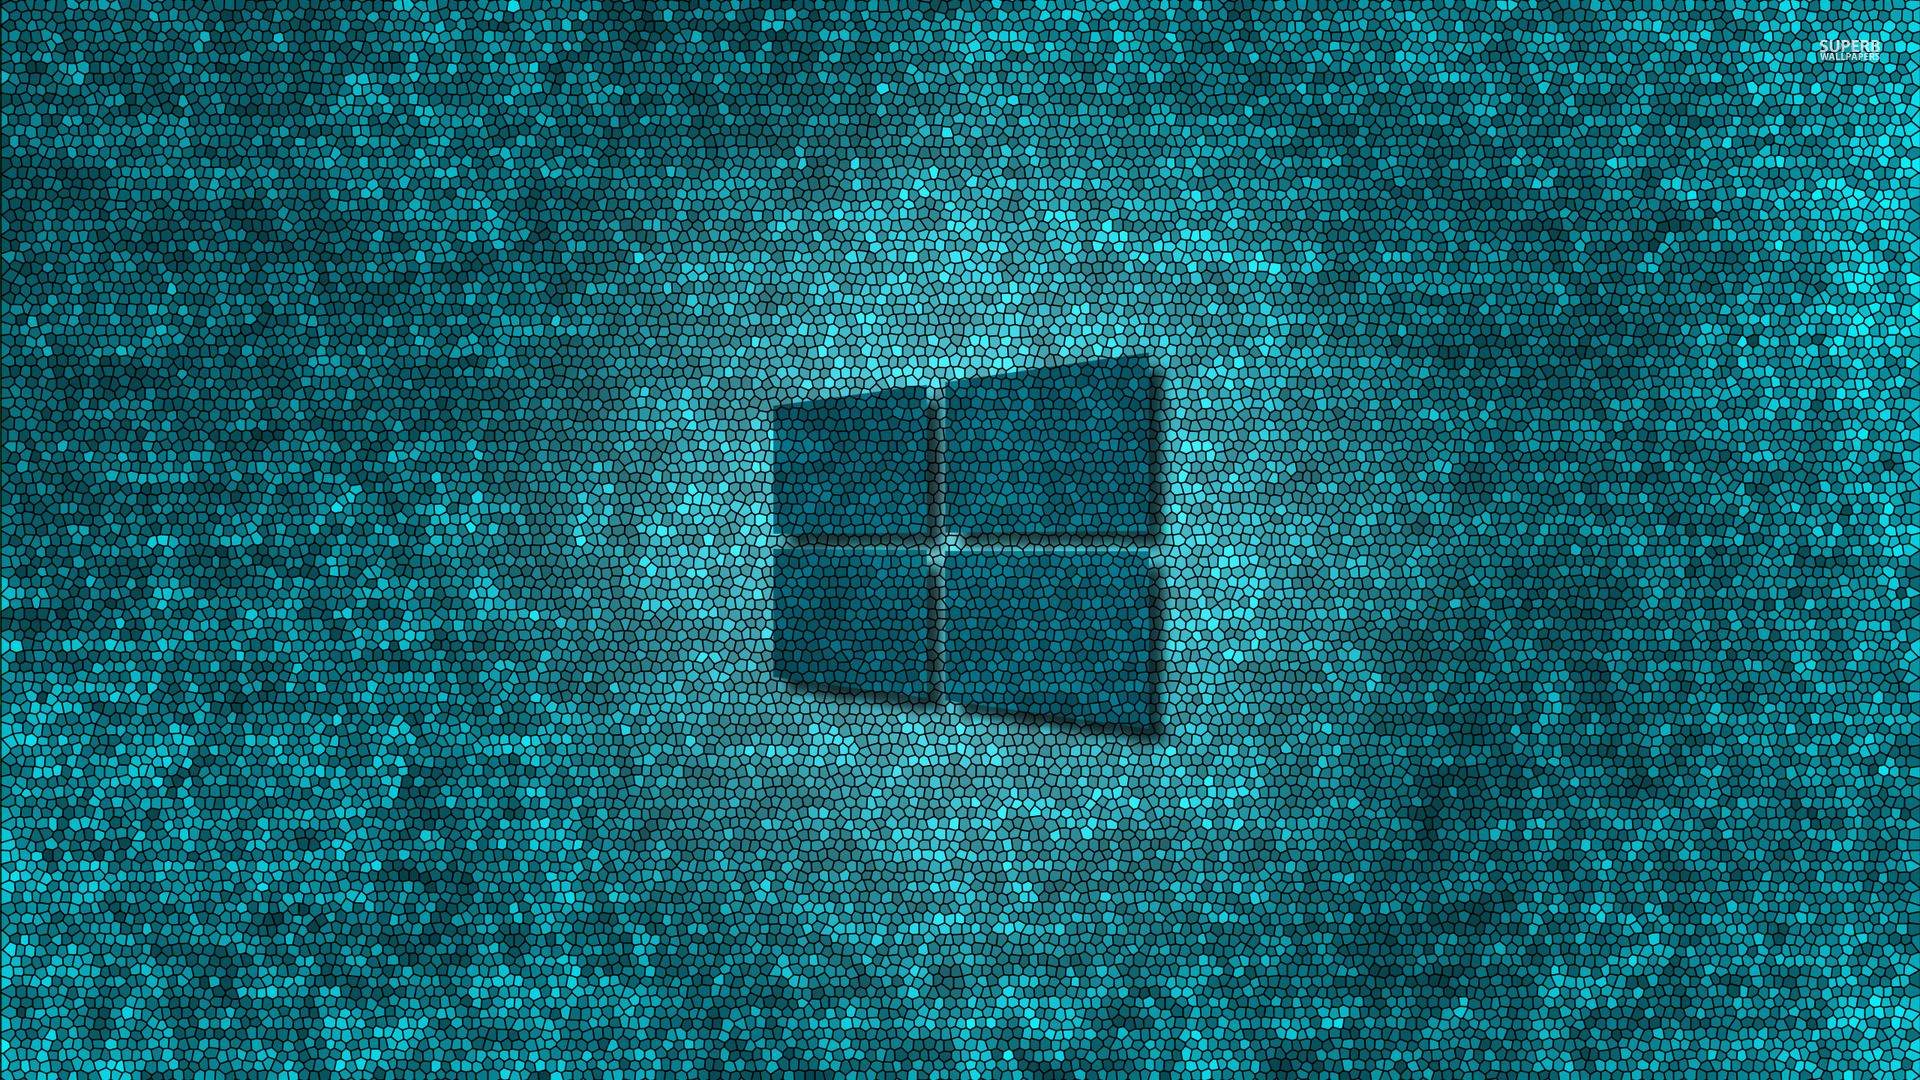 Windows 10 HD Wallpapers